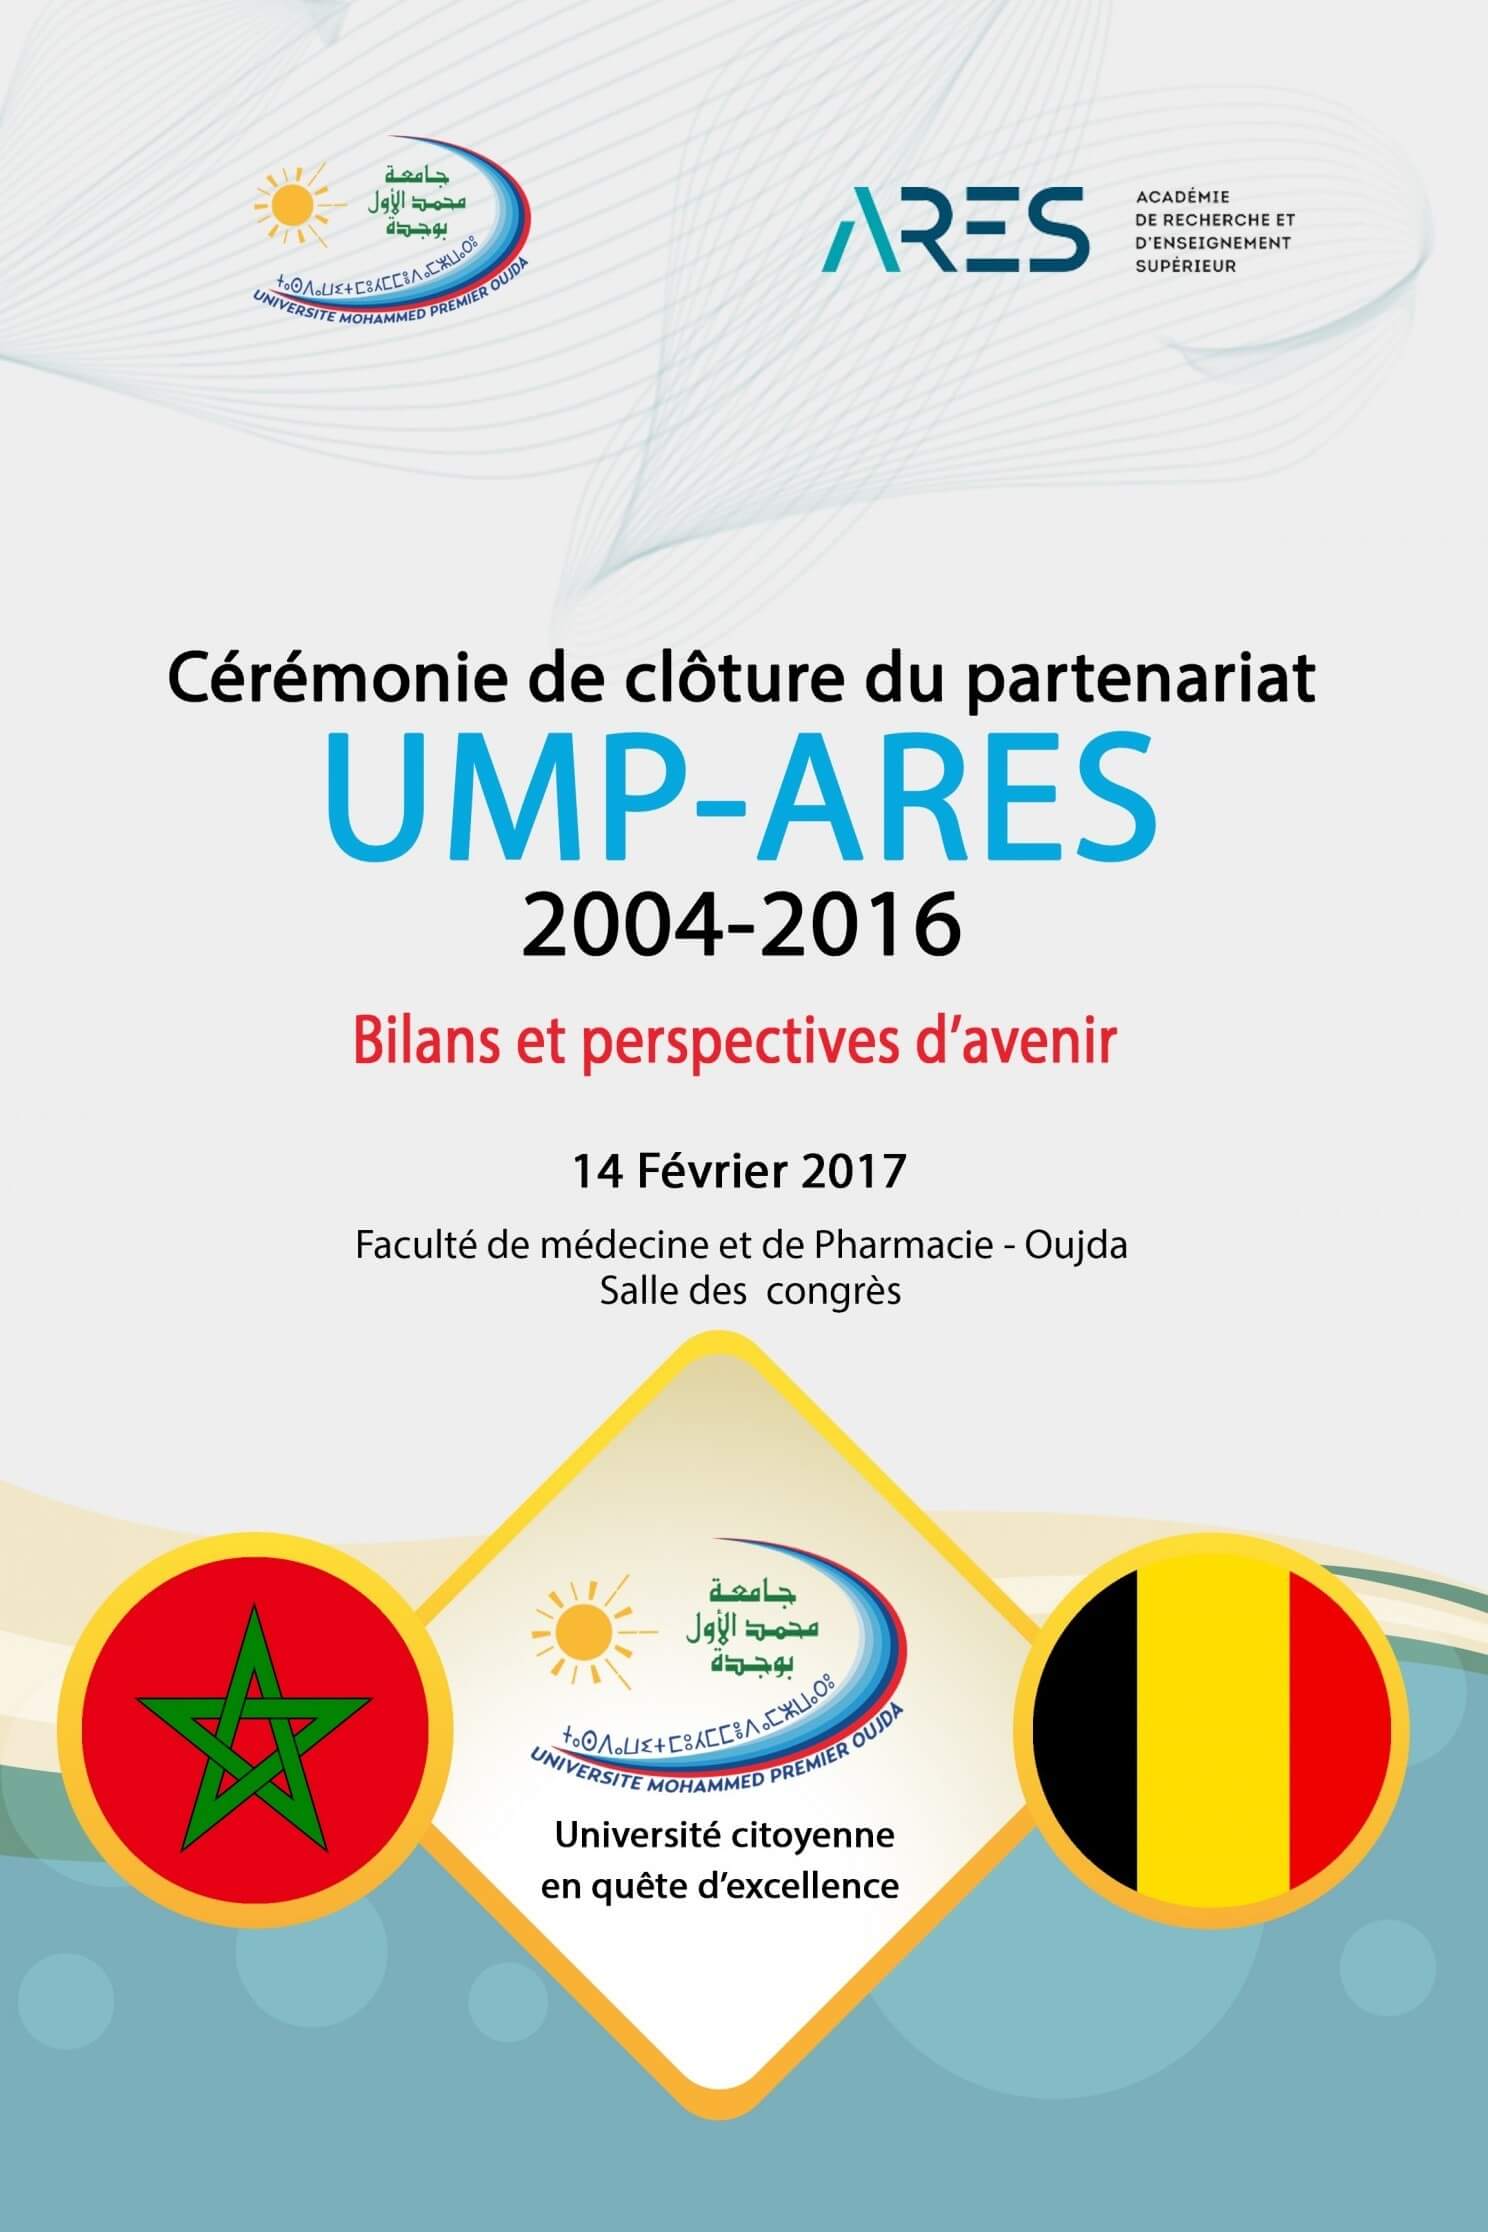 clôture de partenariat belge ARES -UMP